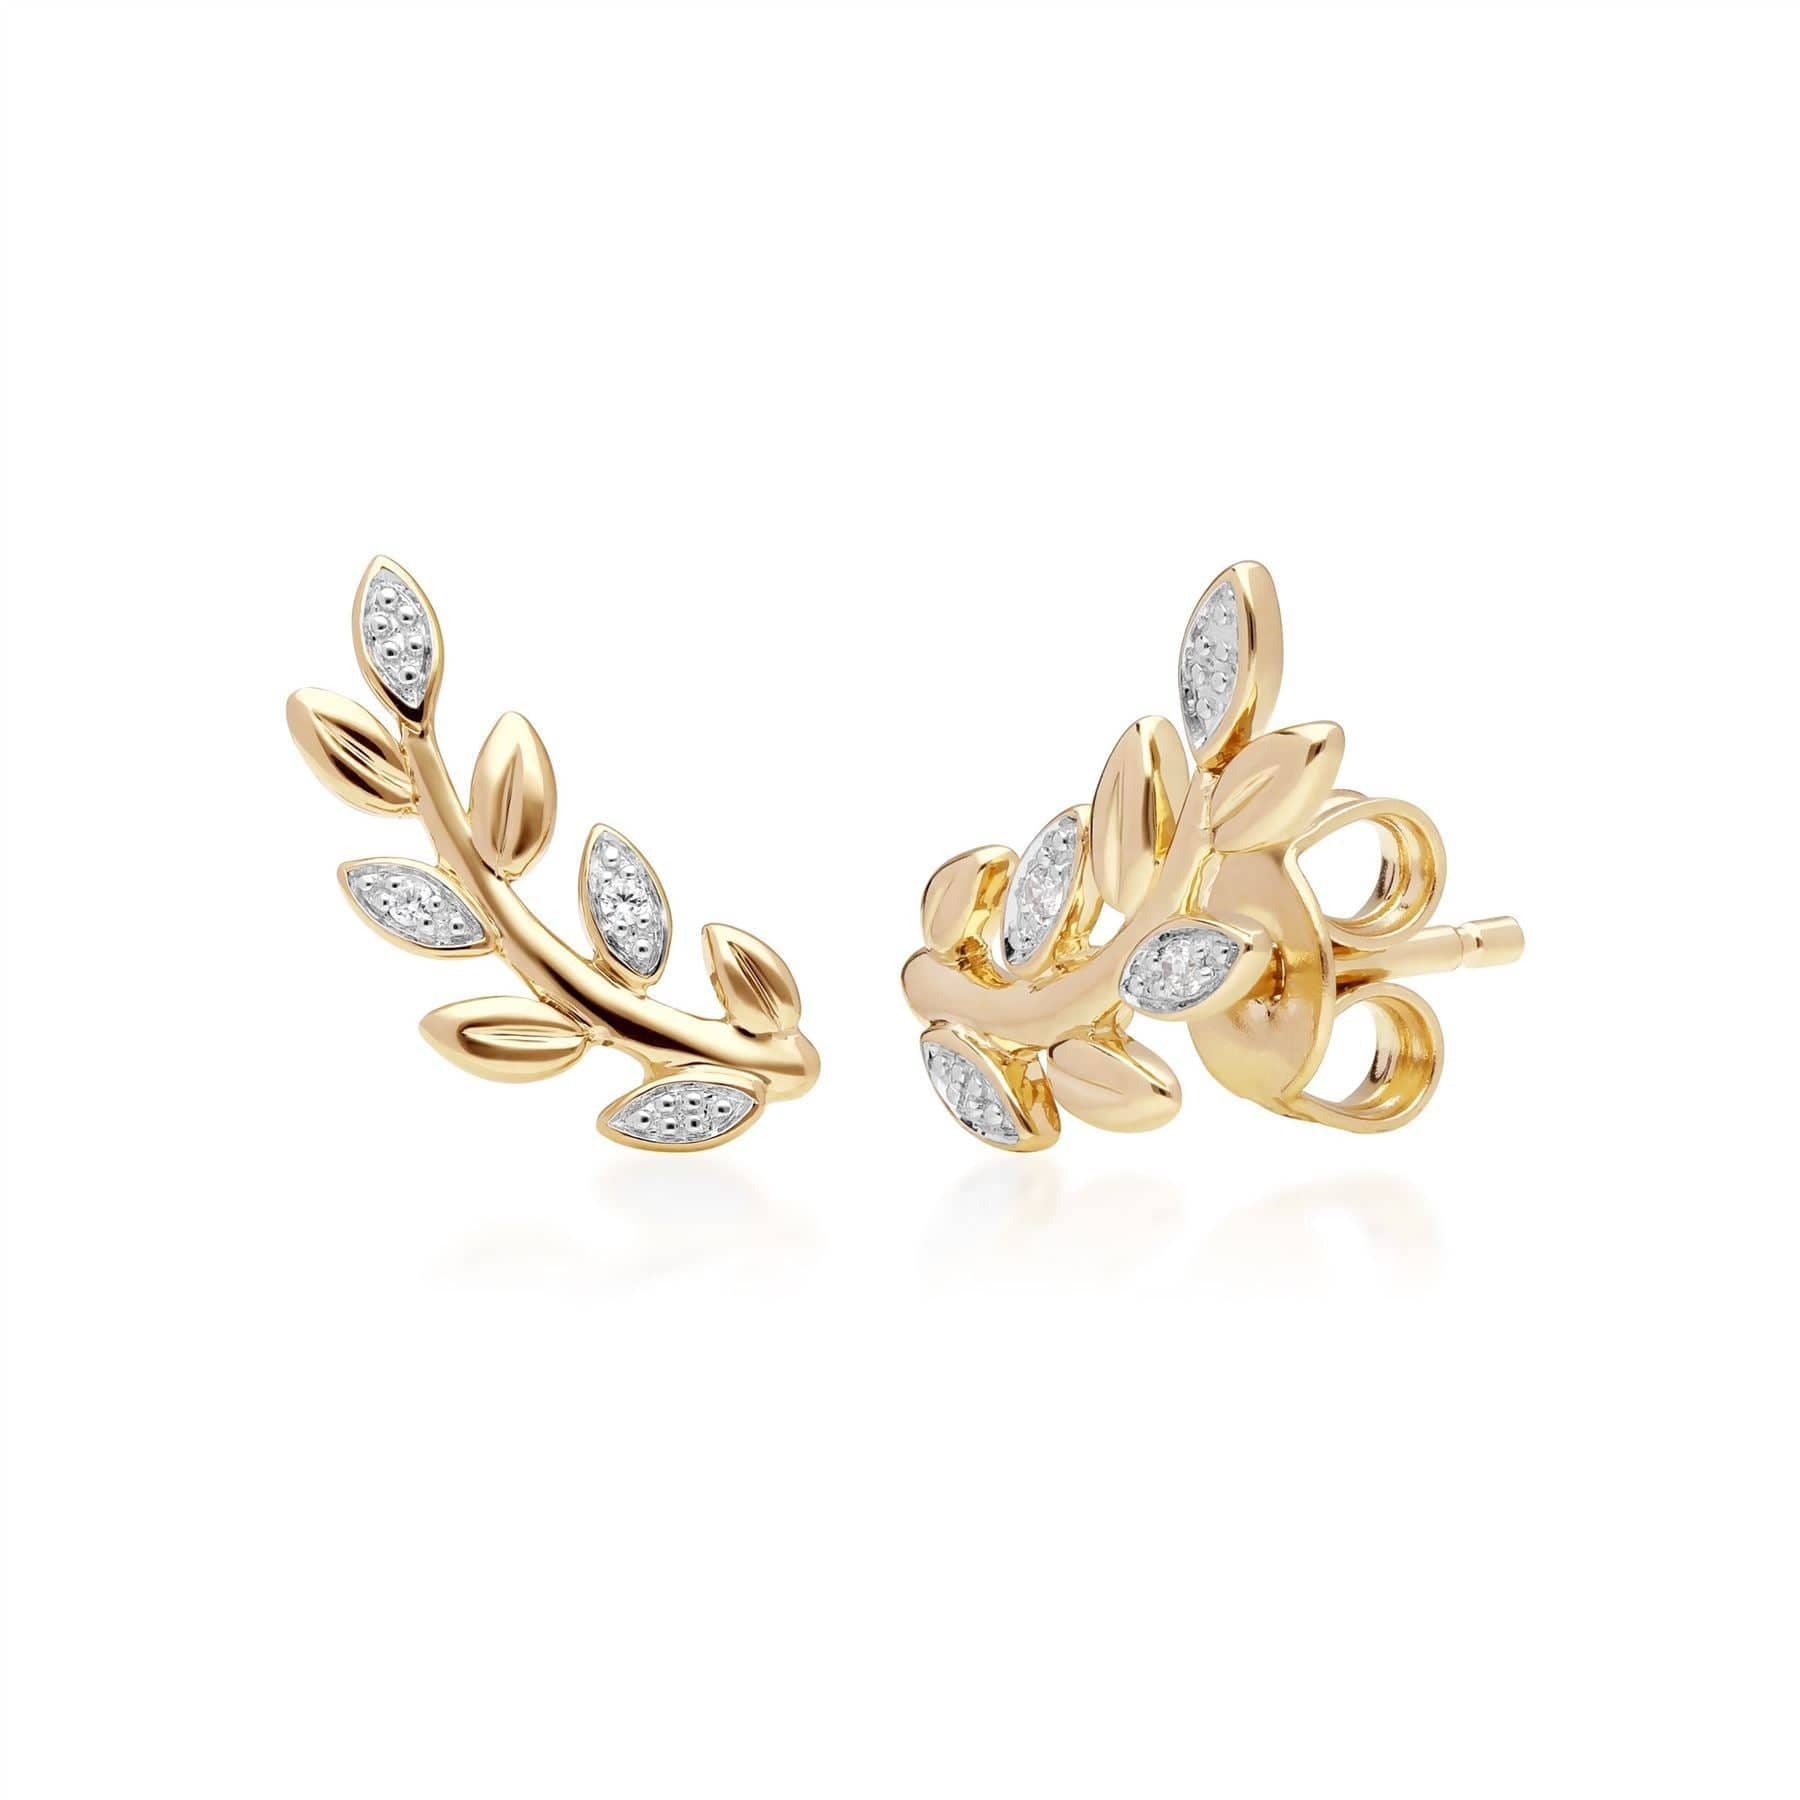 191E0403019-191R0911019 O Leaf Diamond Stud Earring & Ring Set in 9ct Yellow Gold 2